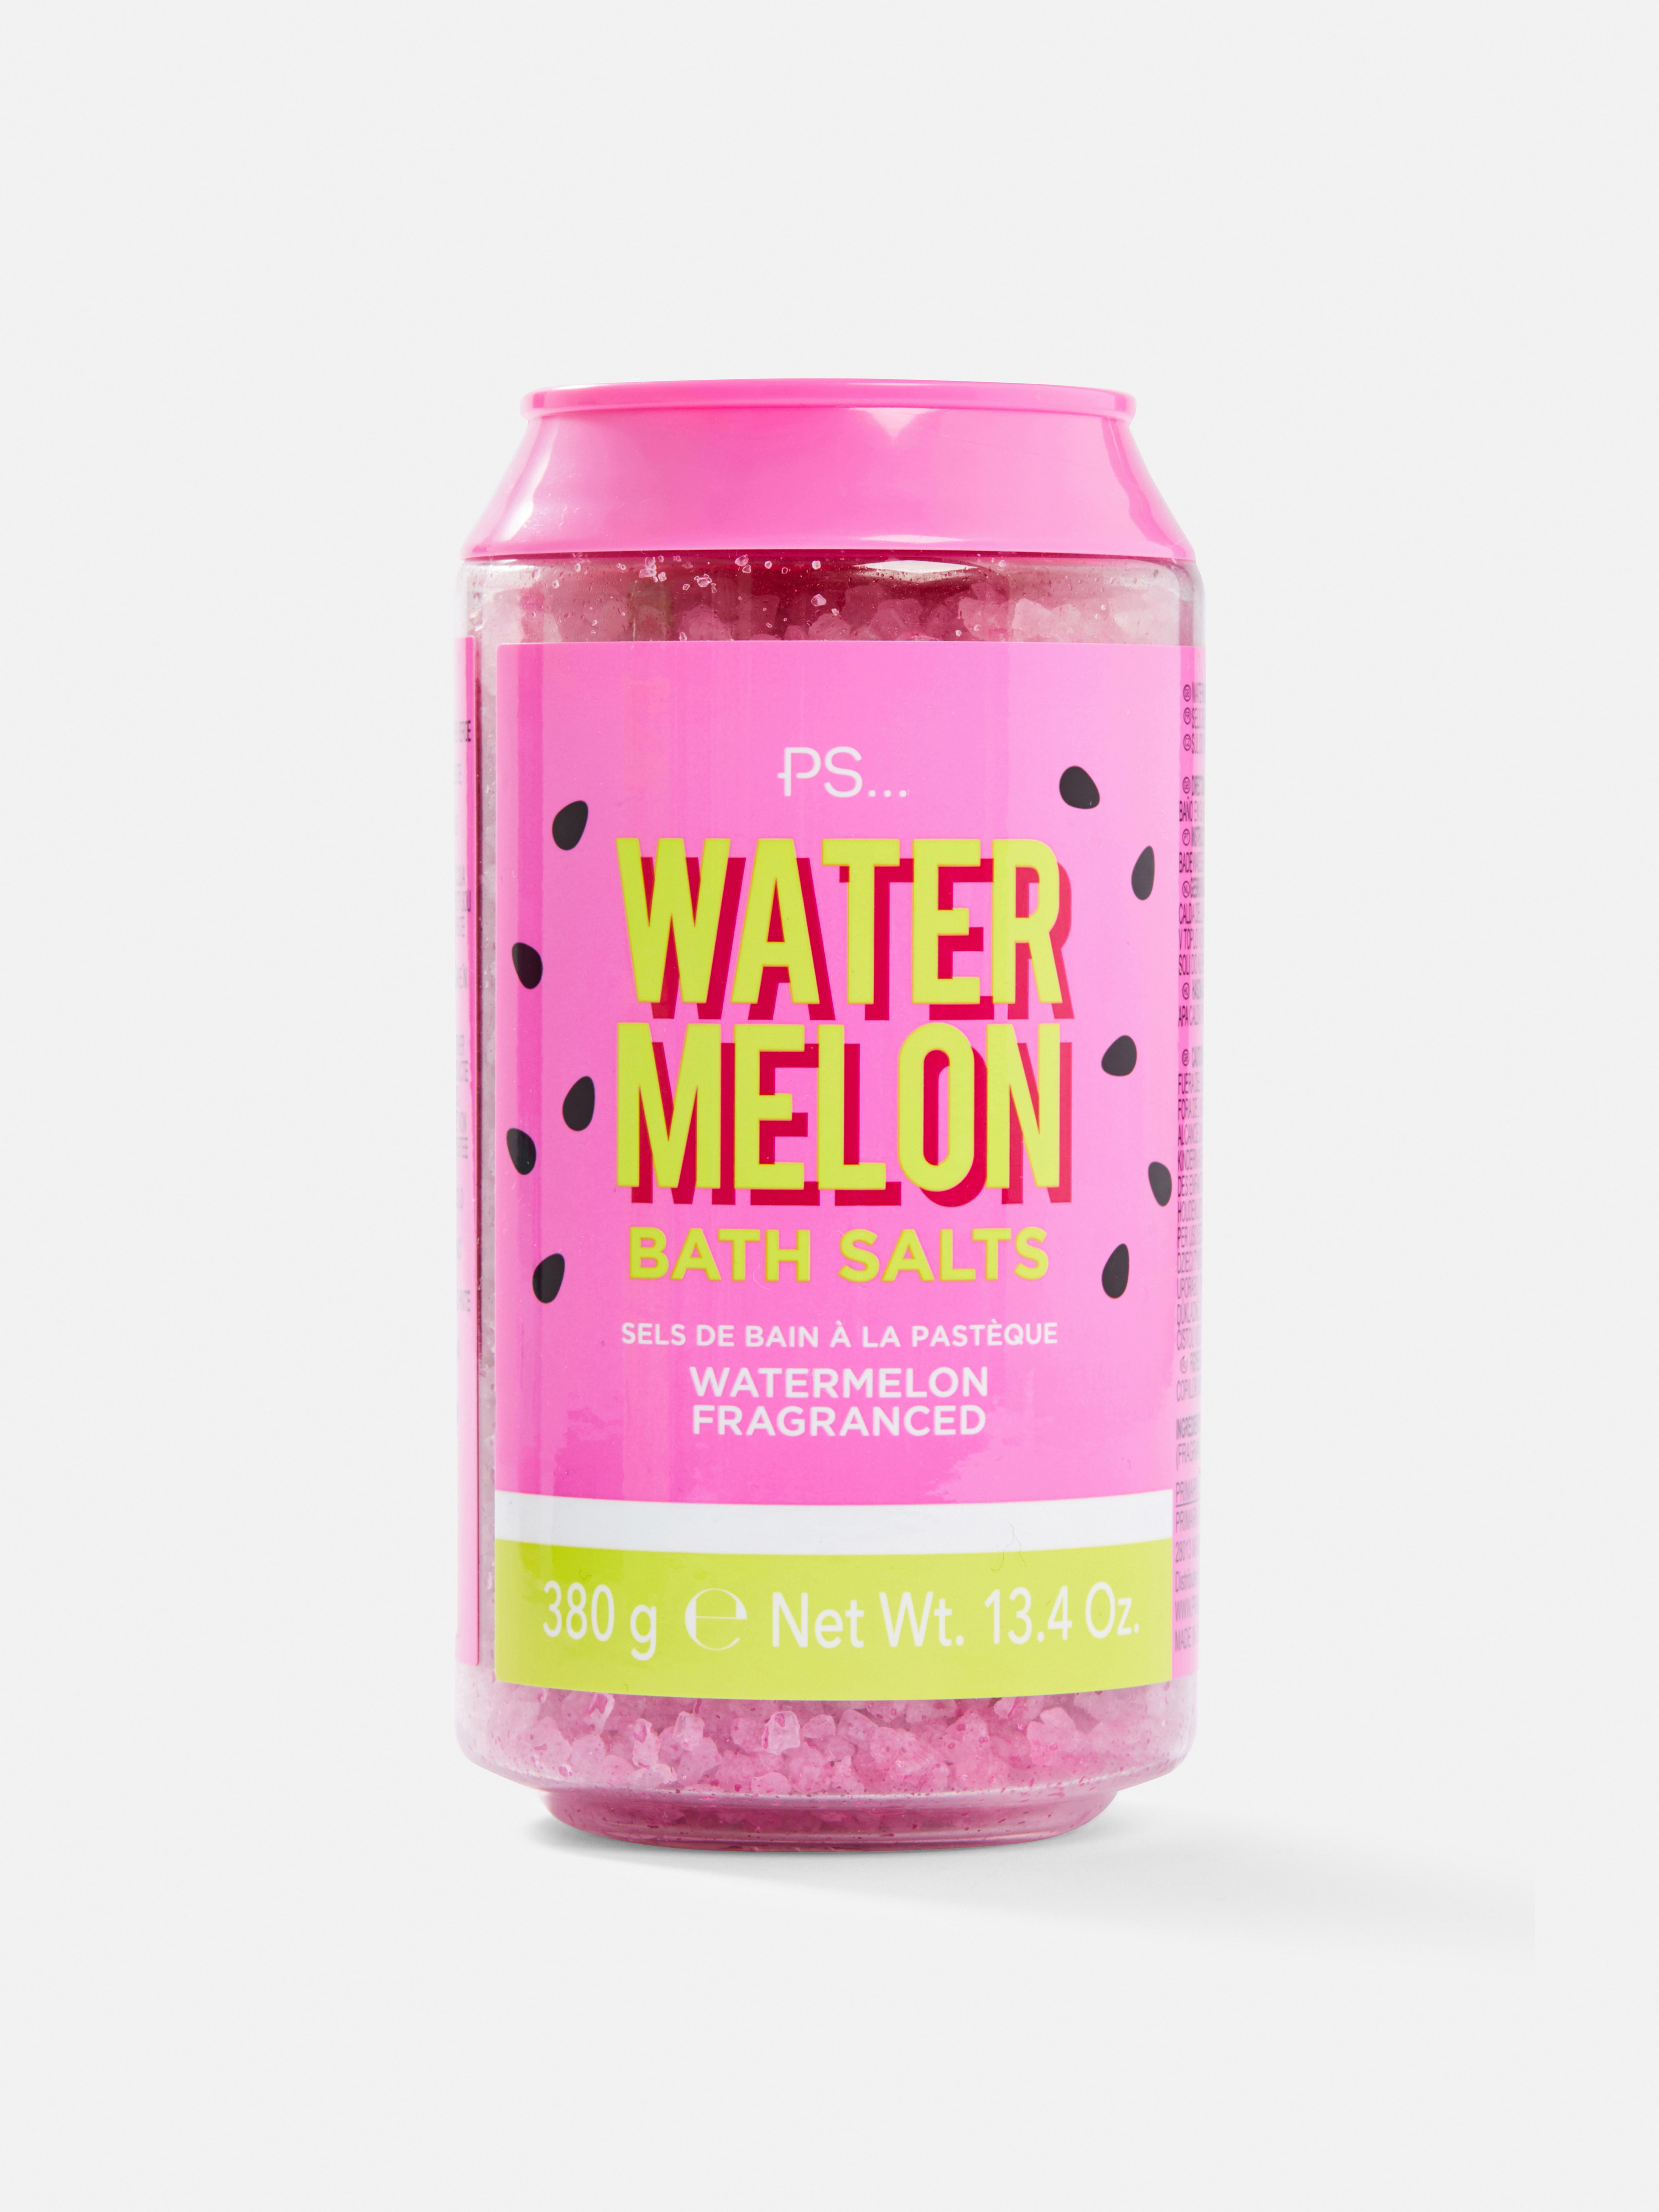 PS Watermelon Bath Salts